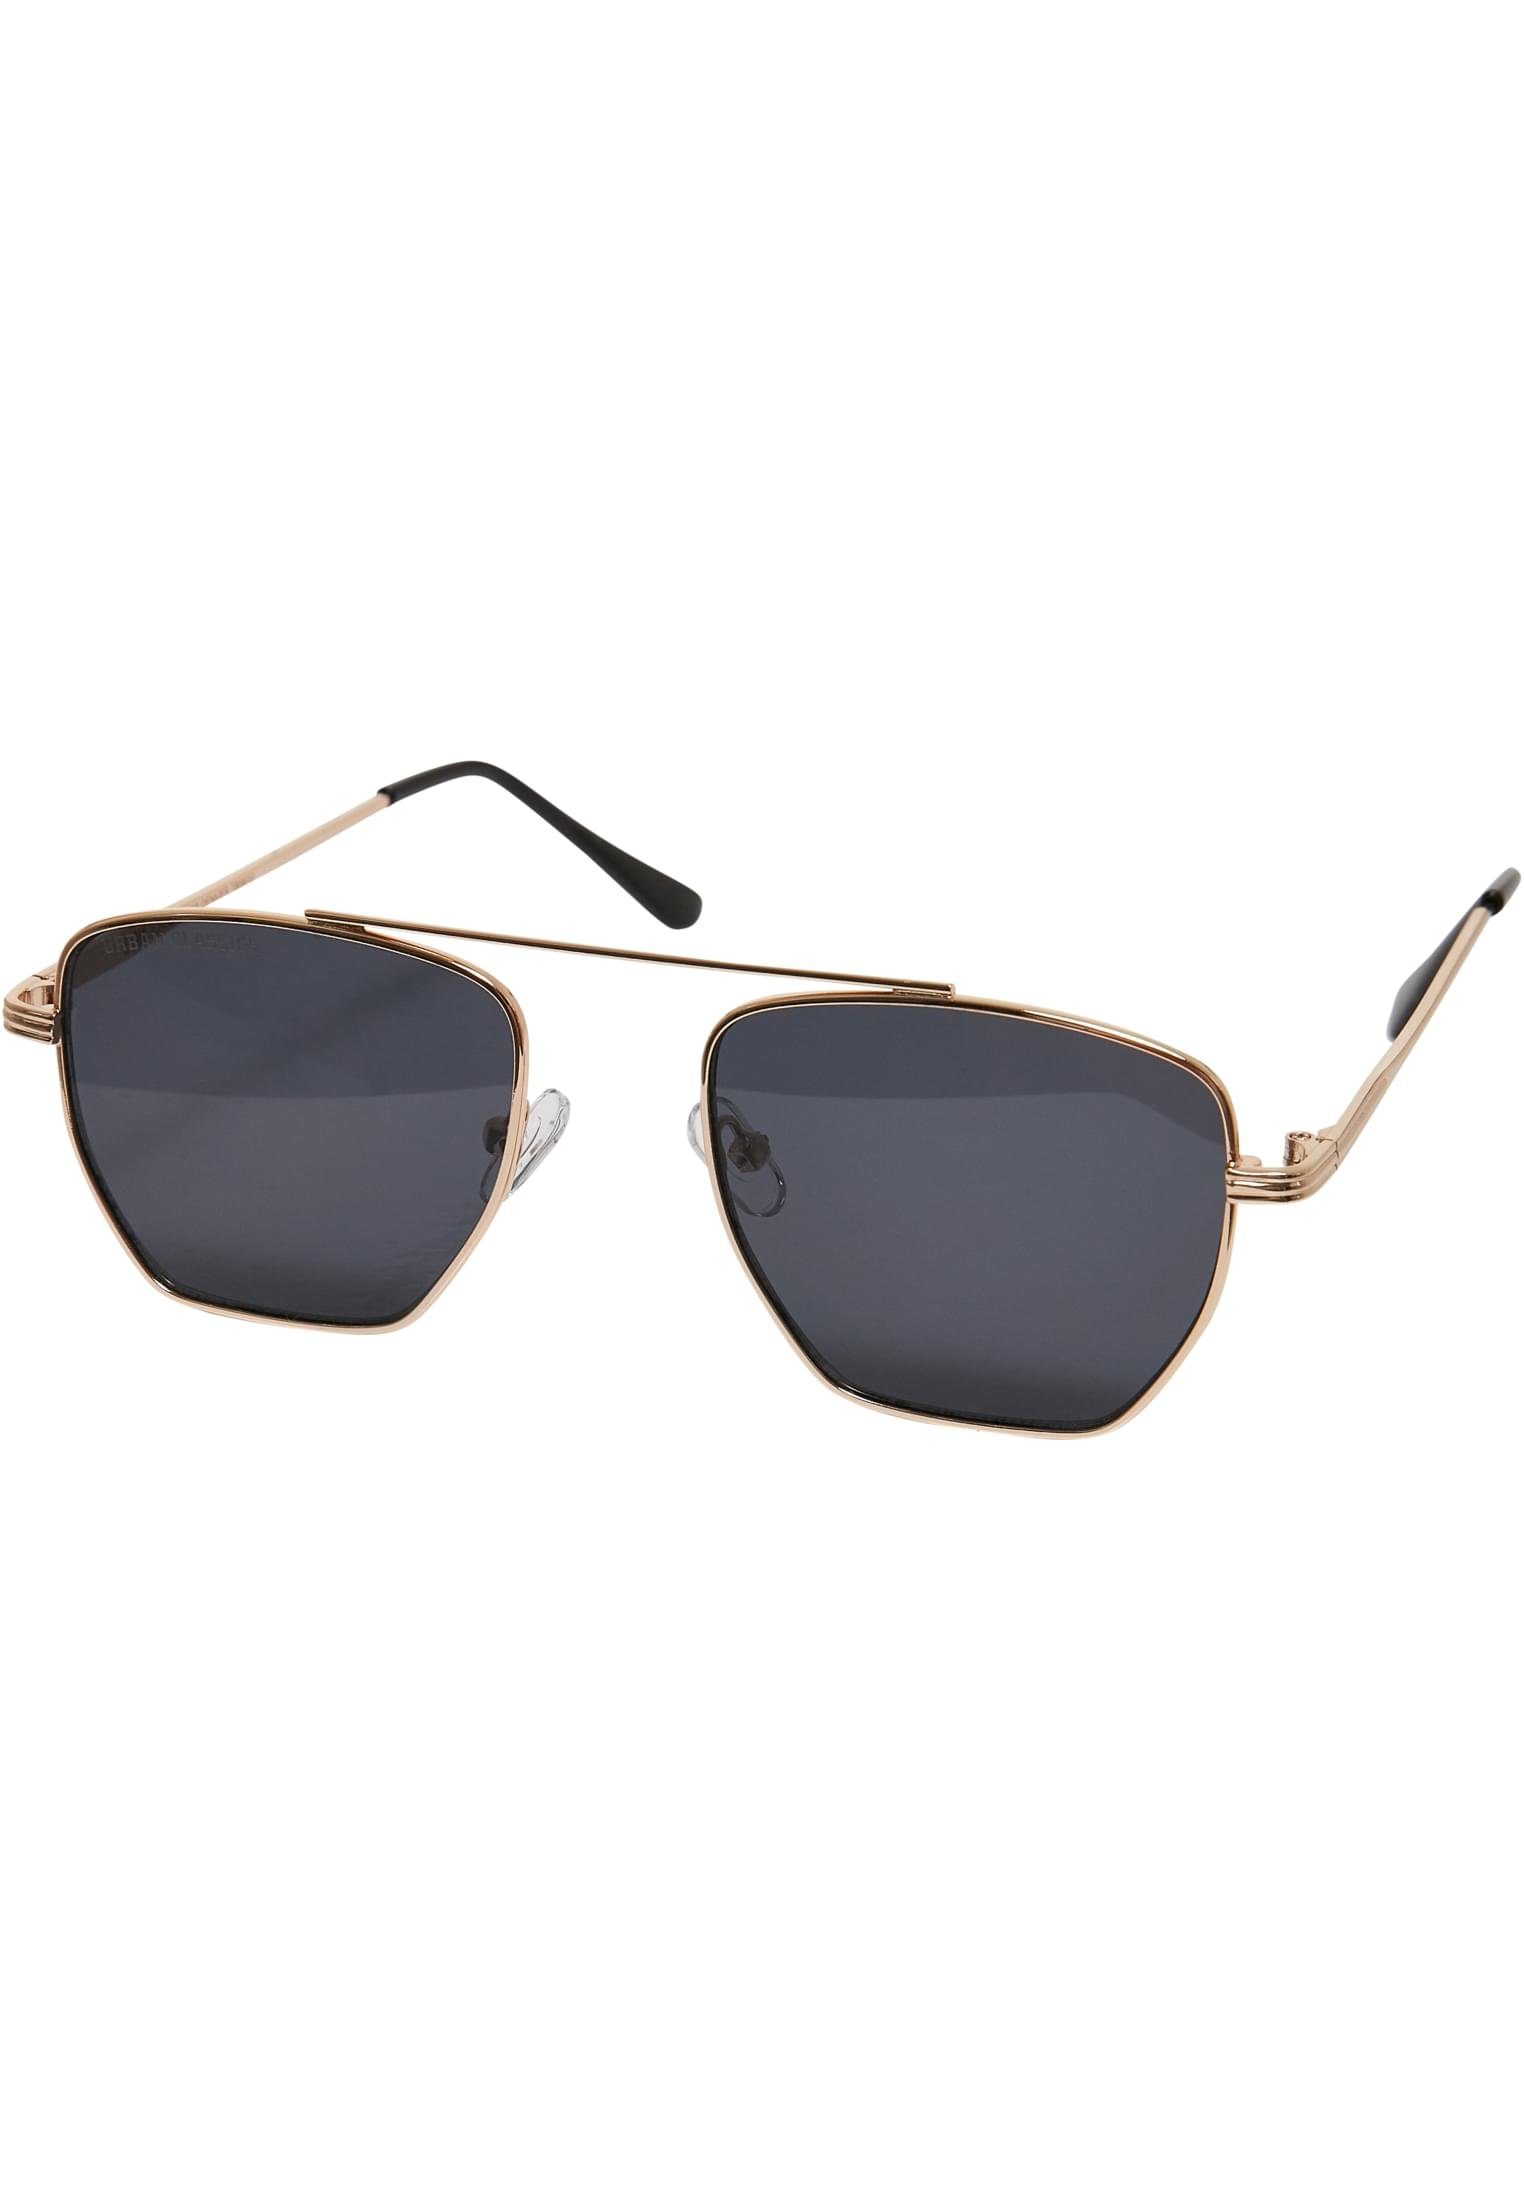 Denver black/gold Unisex CLASSICS URBAN Sunglasses Sonnenbrille